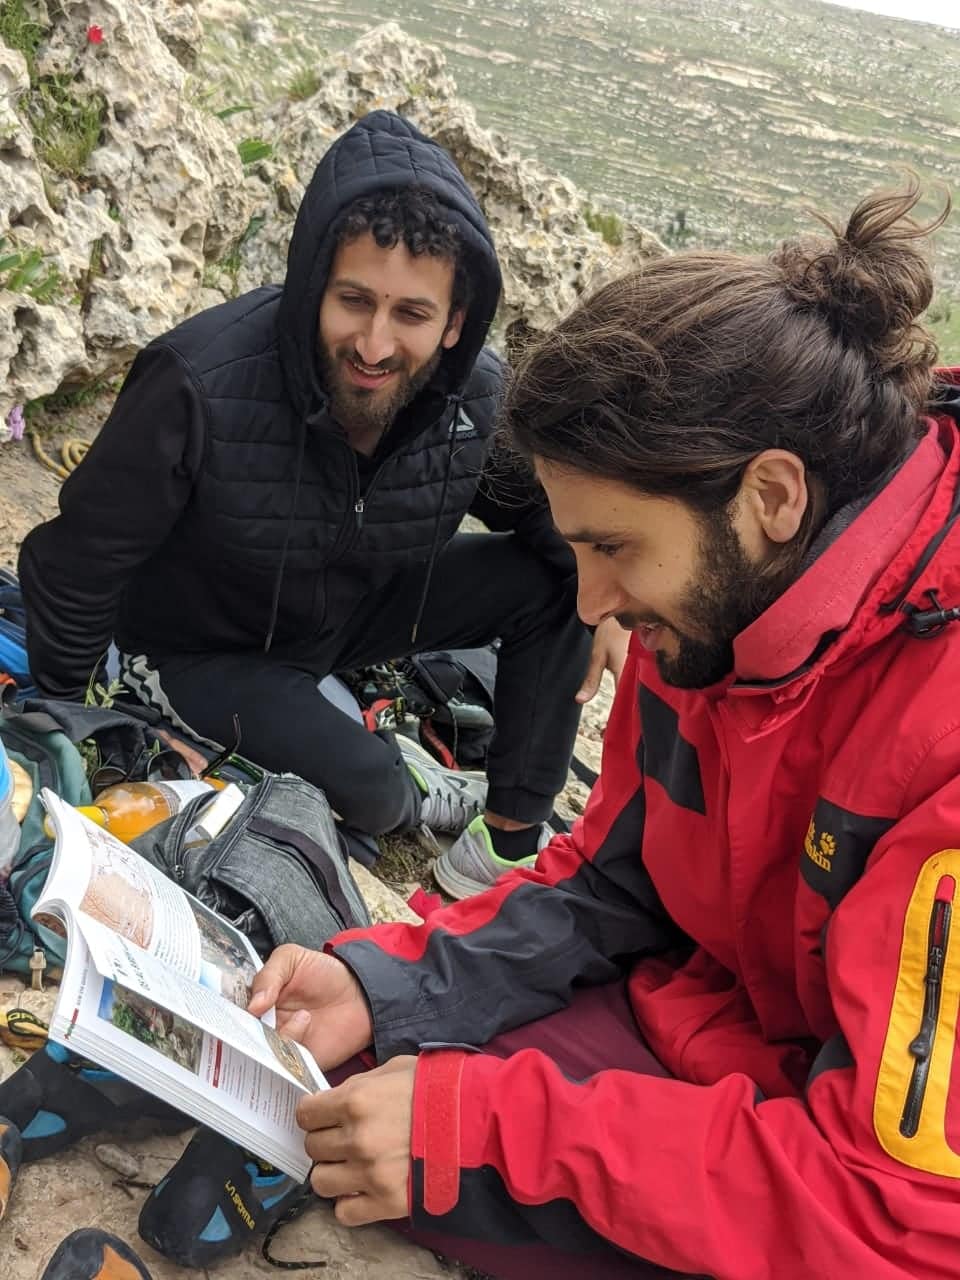 Momen e Mujahed, guide di arrampicata in Palestina